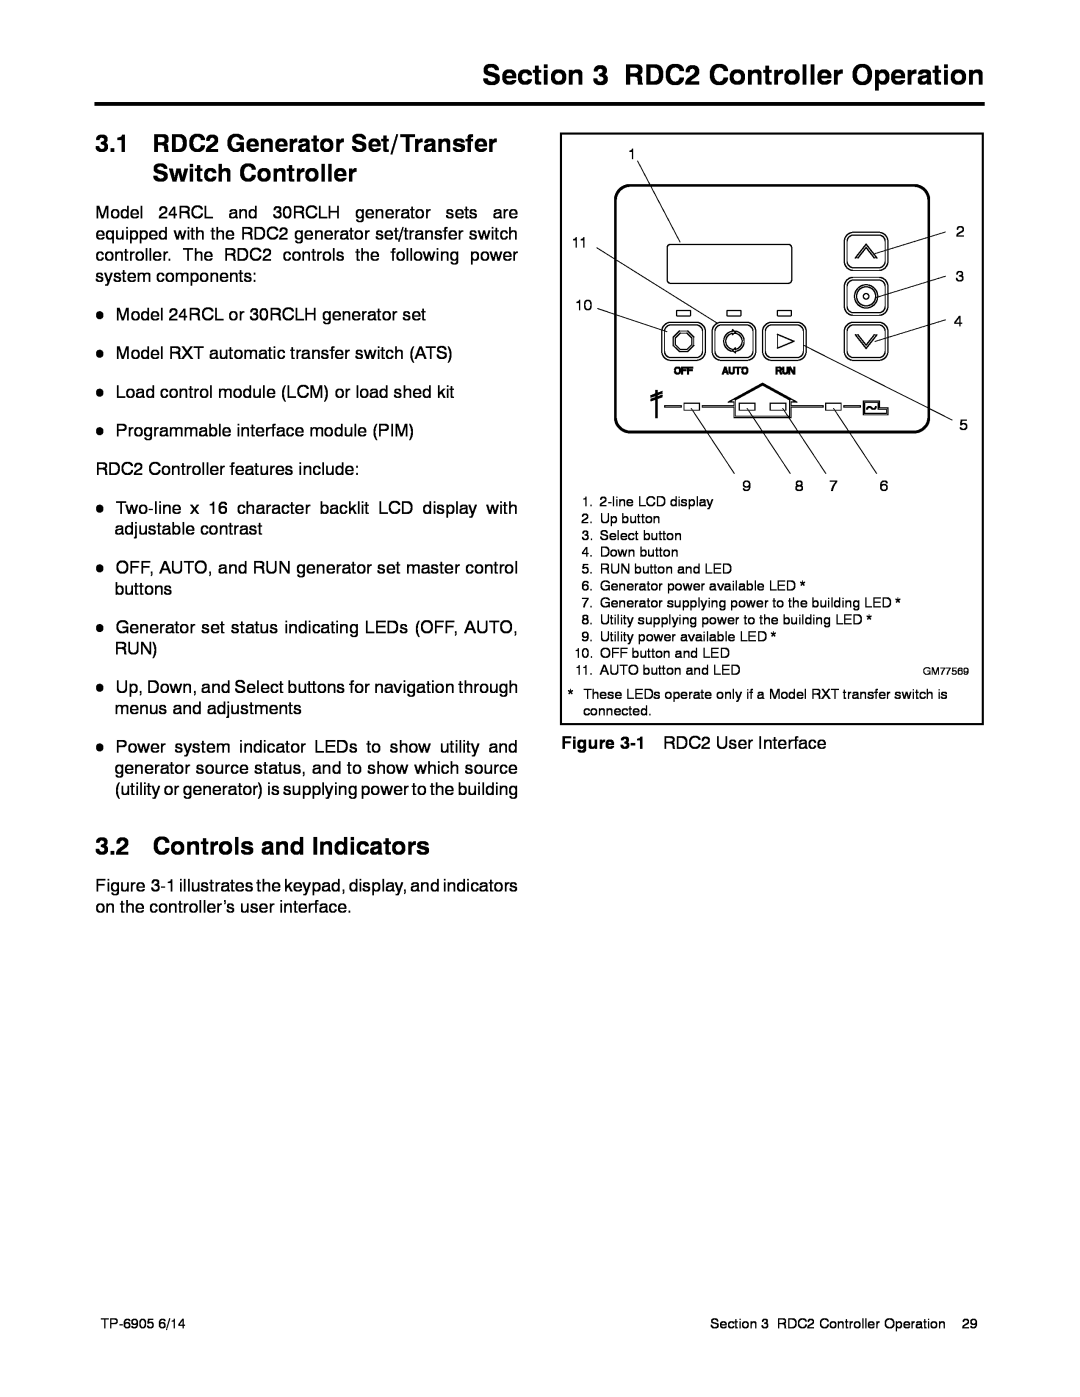 Kohler 24RCL manual RDC2 Controller Operation, Controls and Indicators, 3.1RDC2 Generator Set/Transfer Switch Controller 